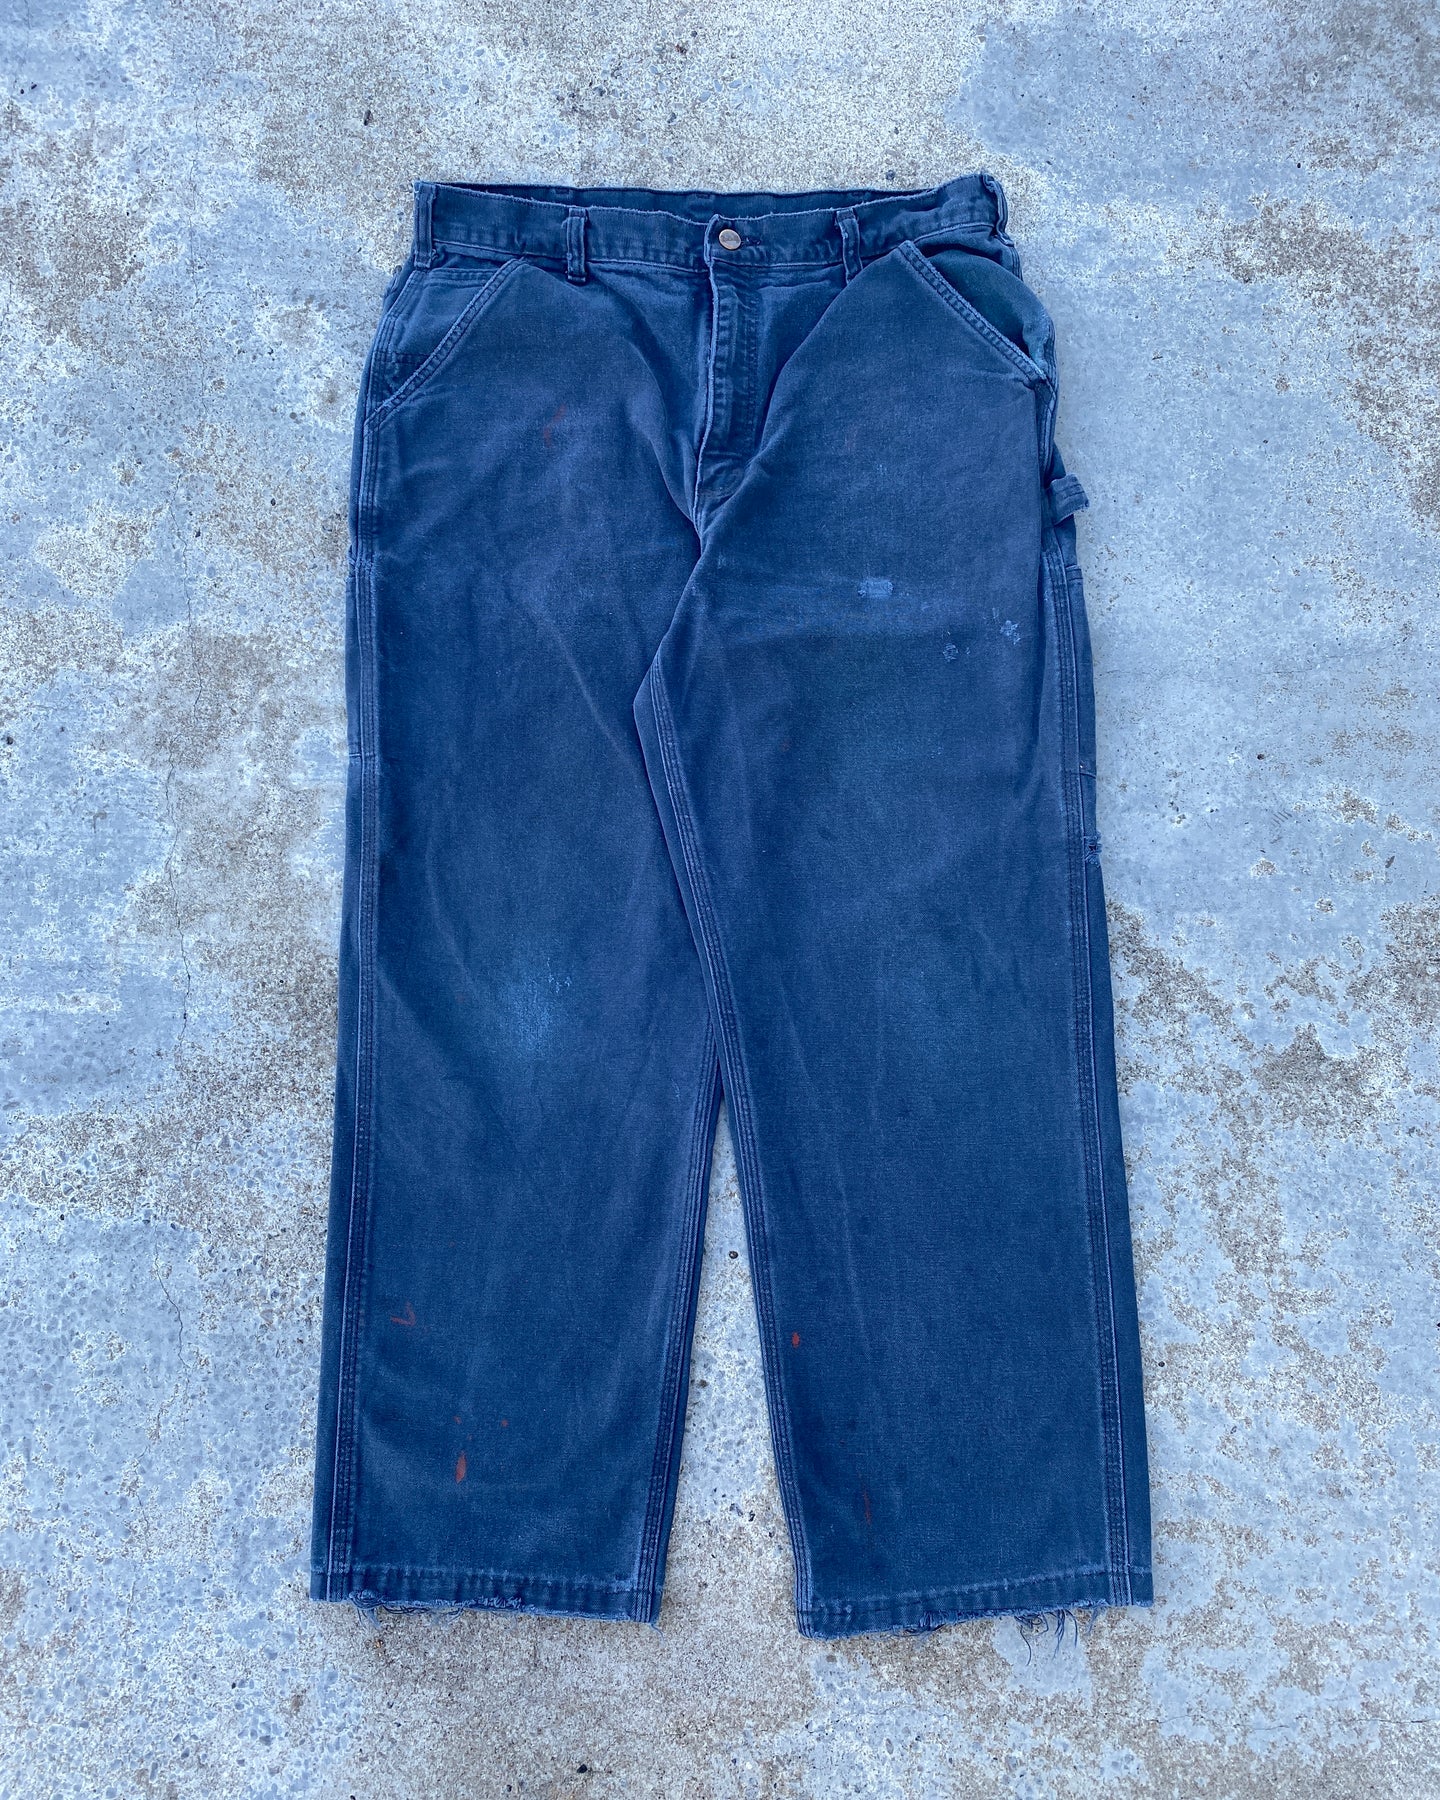 1990s Carhartt Navy Canvas Carpenter Pants - Size 36 x 29